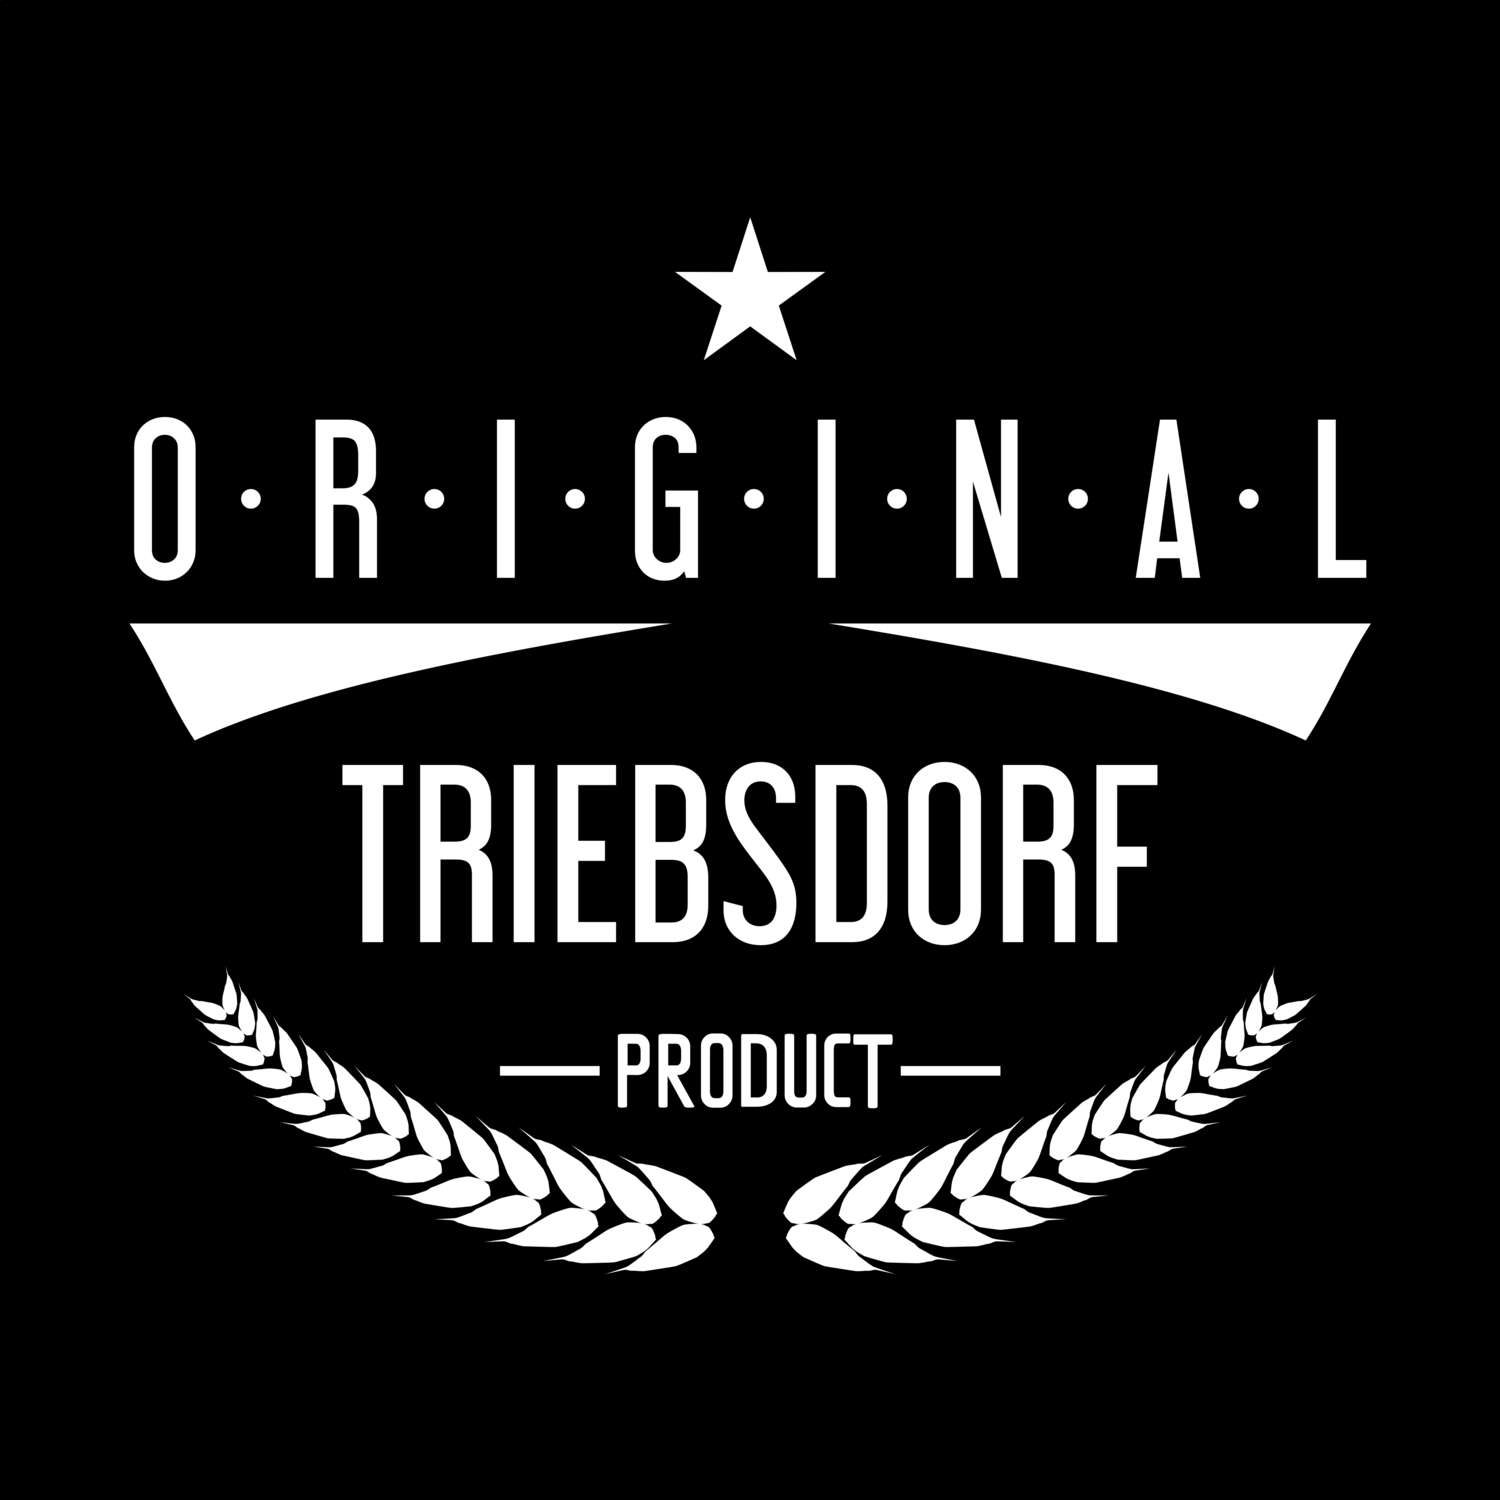 Triebsdorf T-Shirt »Original Product«